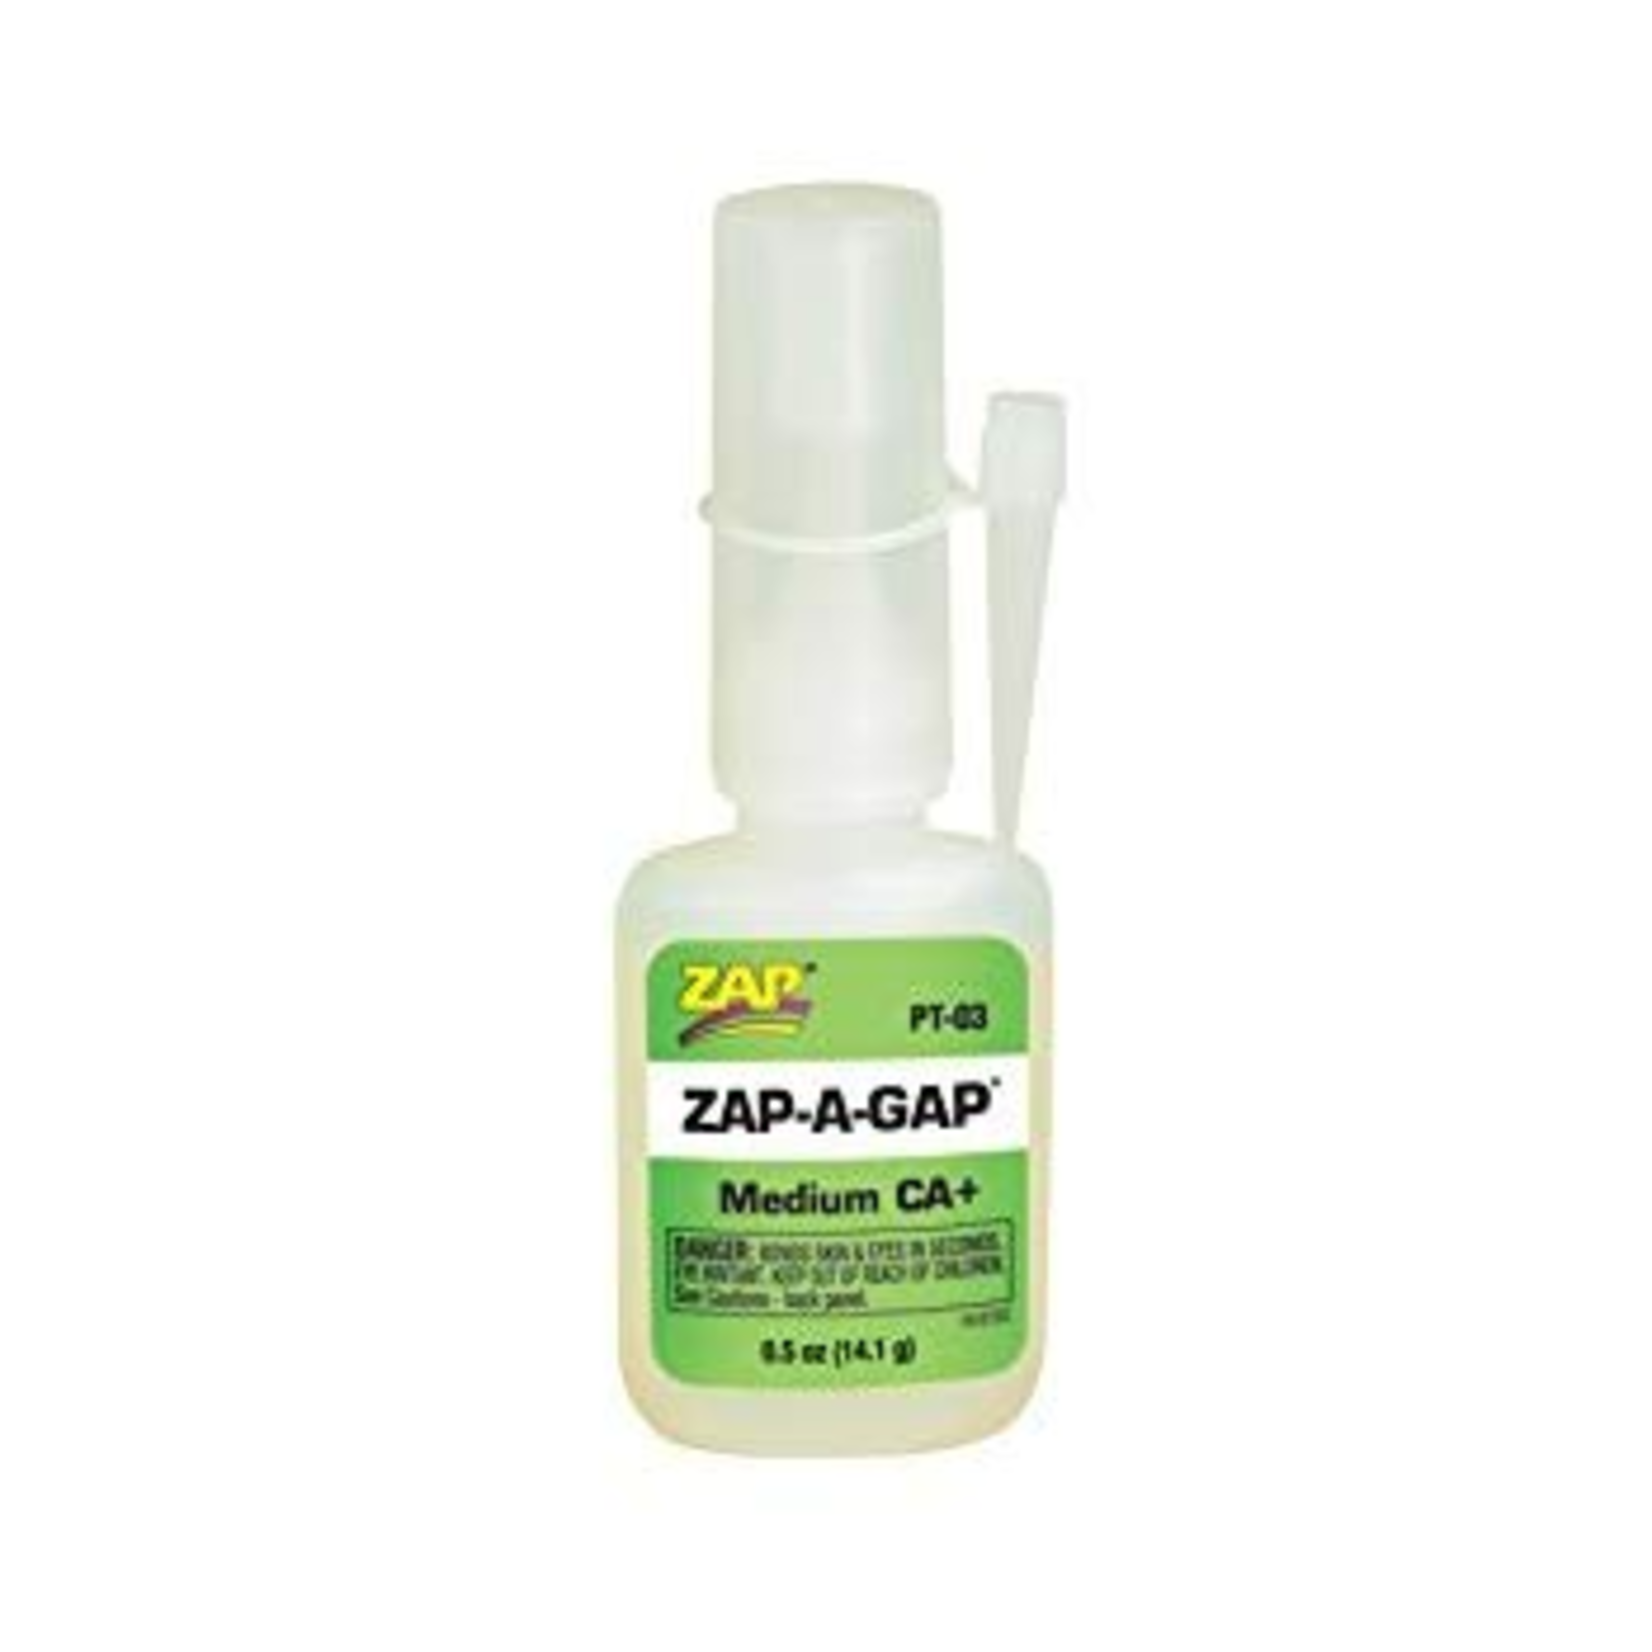 Zap 03 ZAP A Gap CA+ Glue, 1/2 oz